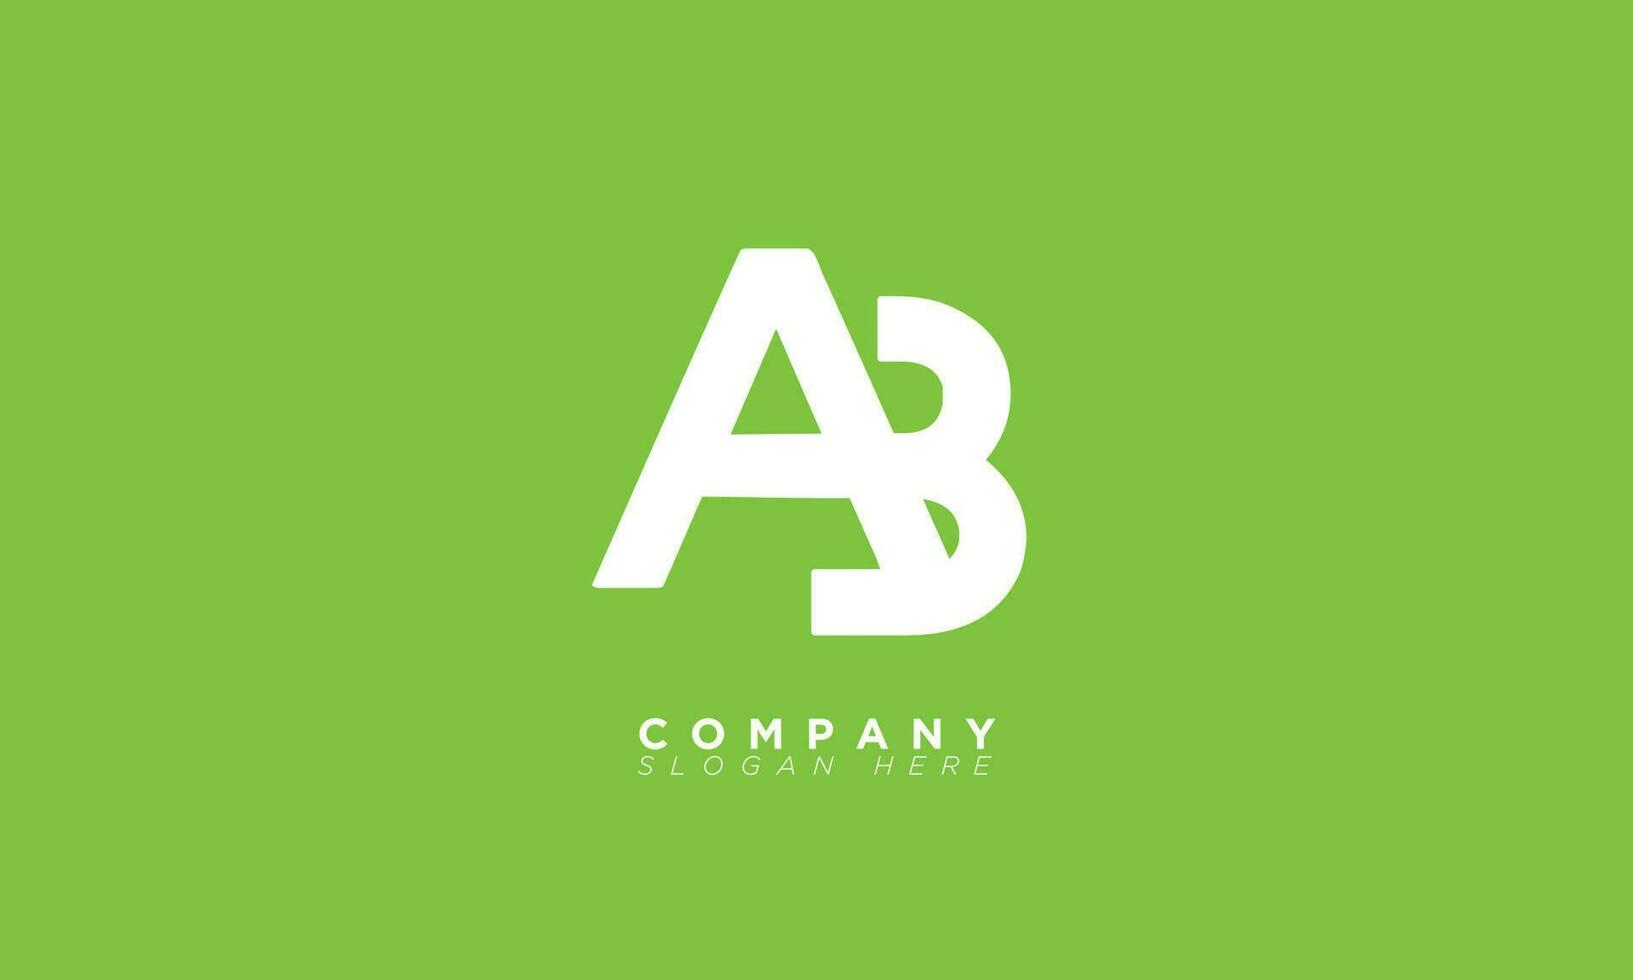 AB Alphabet letters Initials Monogram logo BA, A and B vector